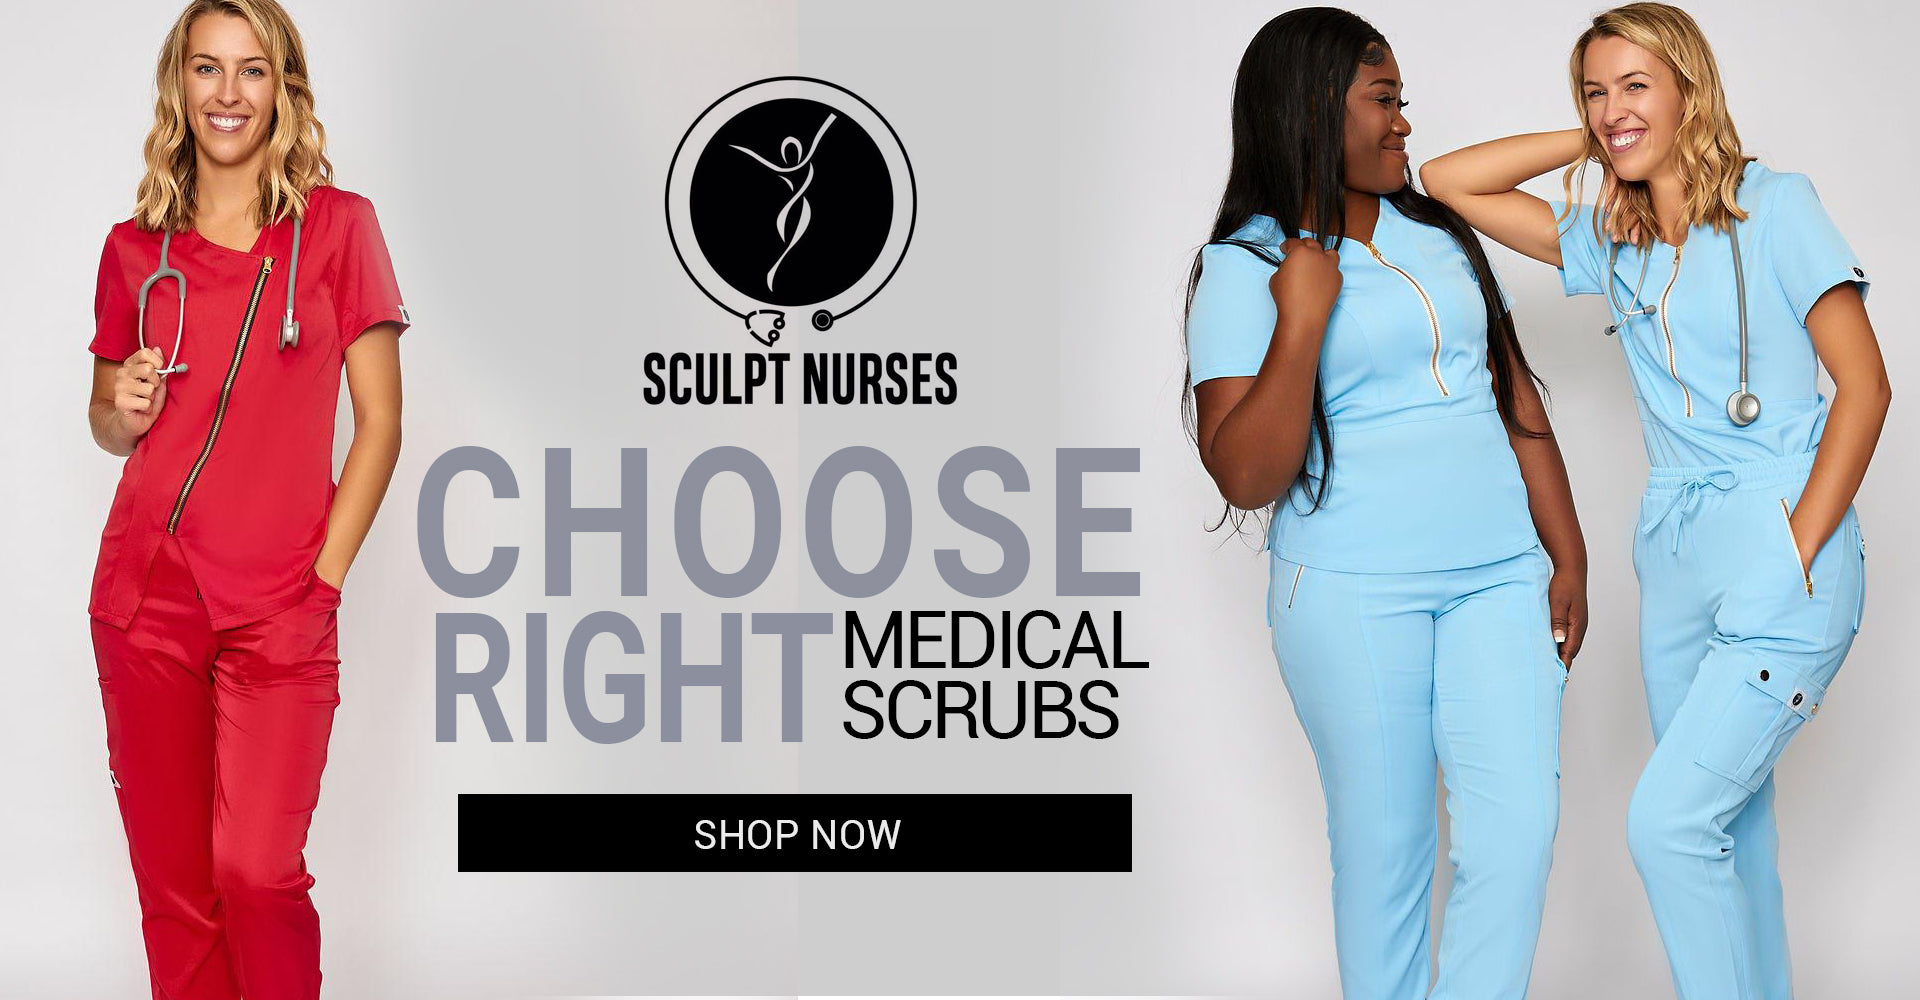 Sculpt Nurses, Online Store for Healthcare Apparel – Sculpt Nurses